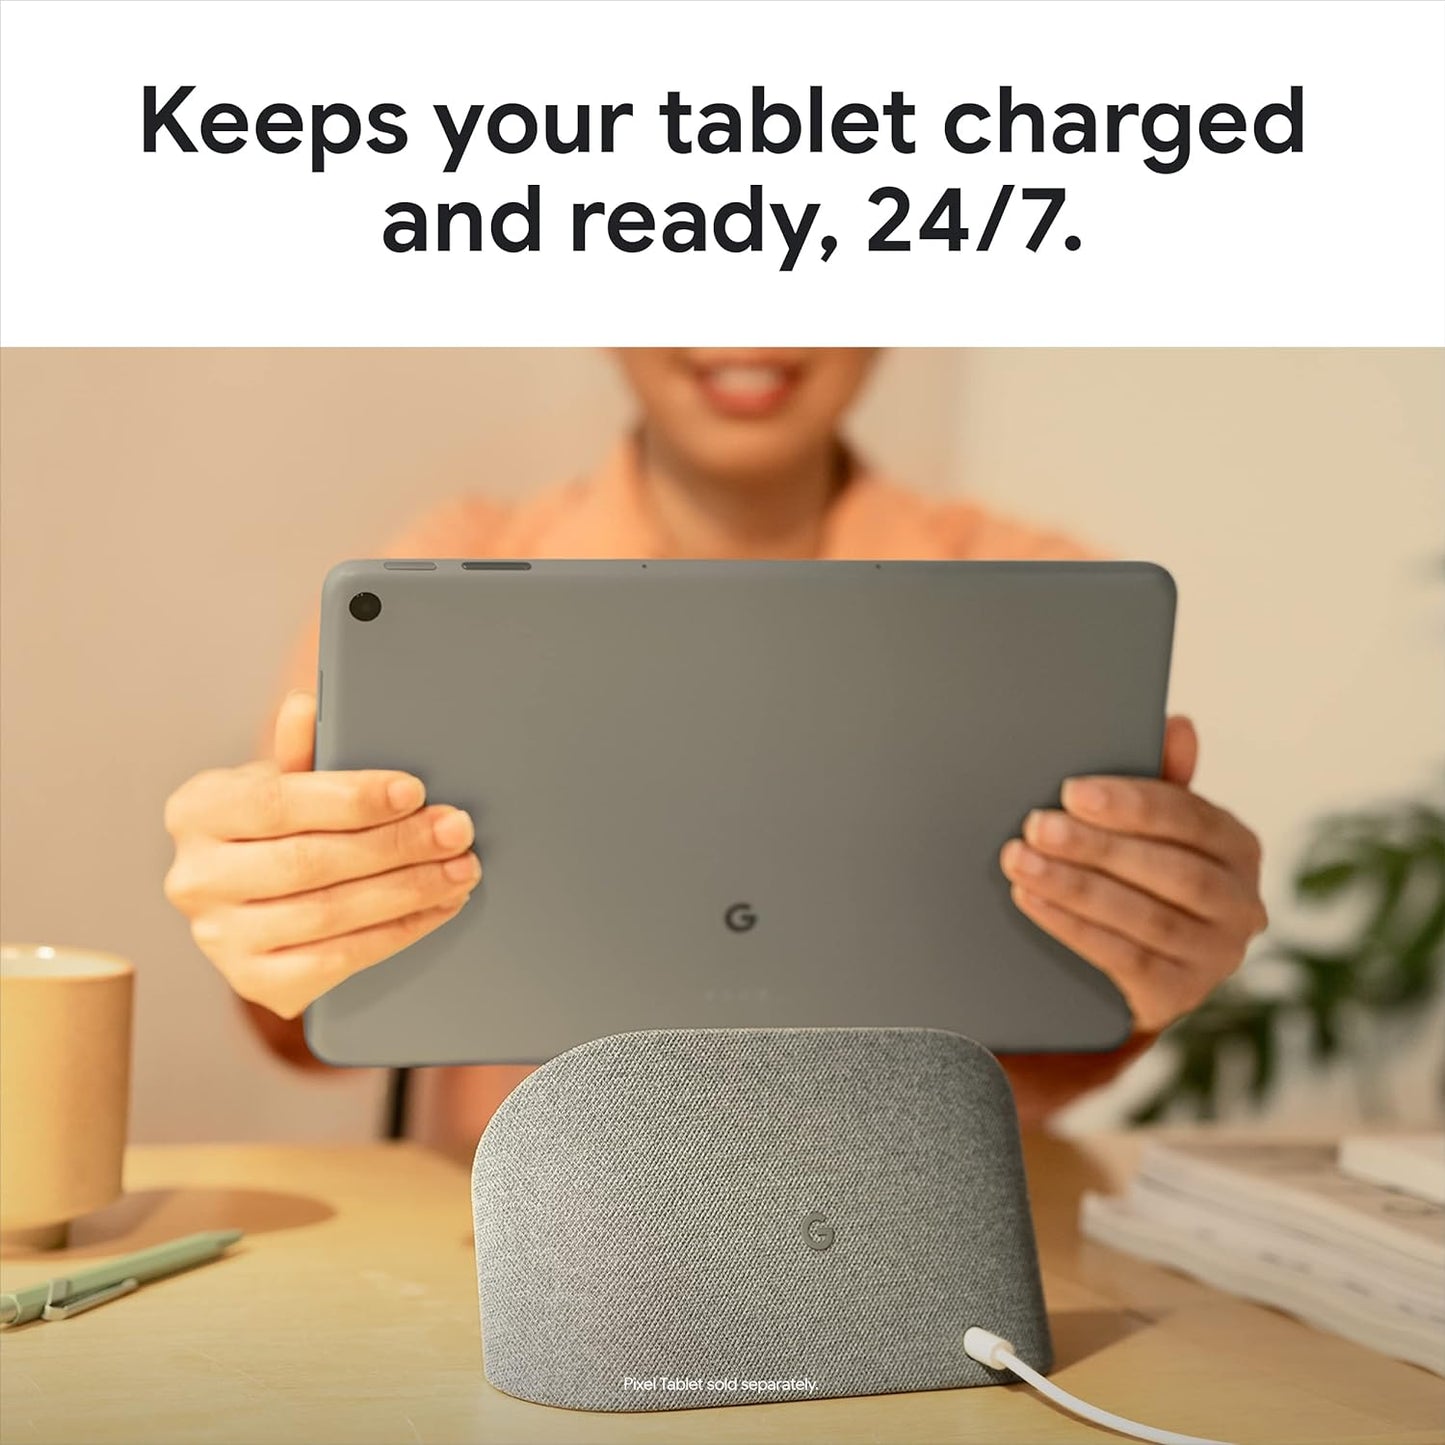 Google Pixel Tablet Charging Speaker Dock - Android Tablet Dock with Full-Range Speaker - Porcelain